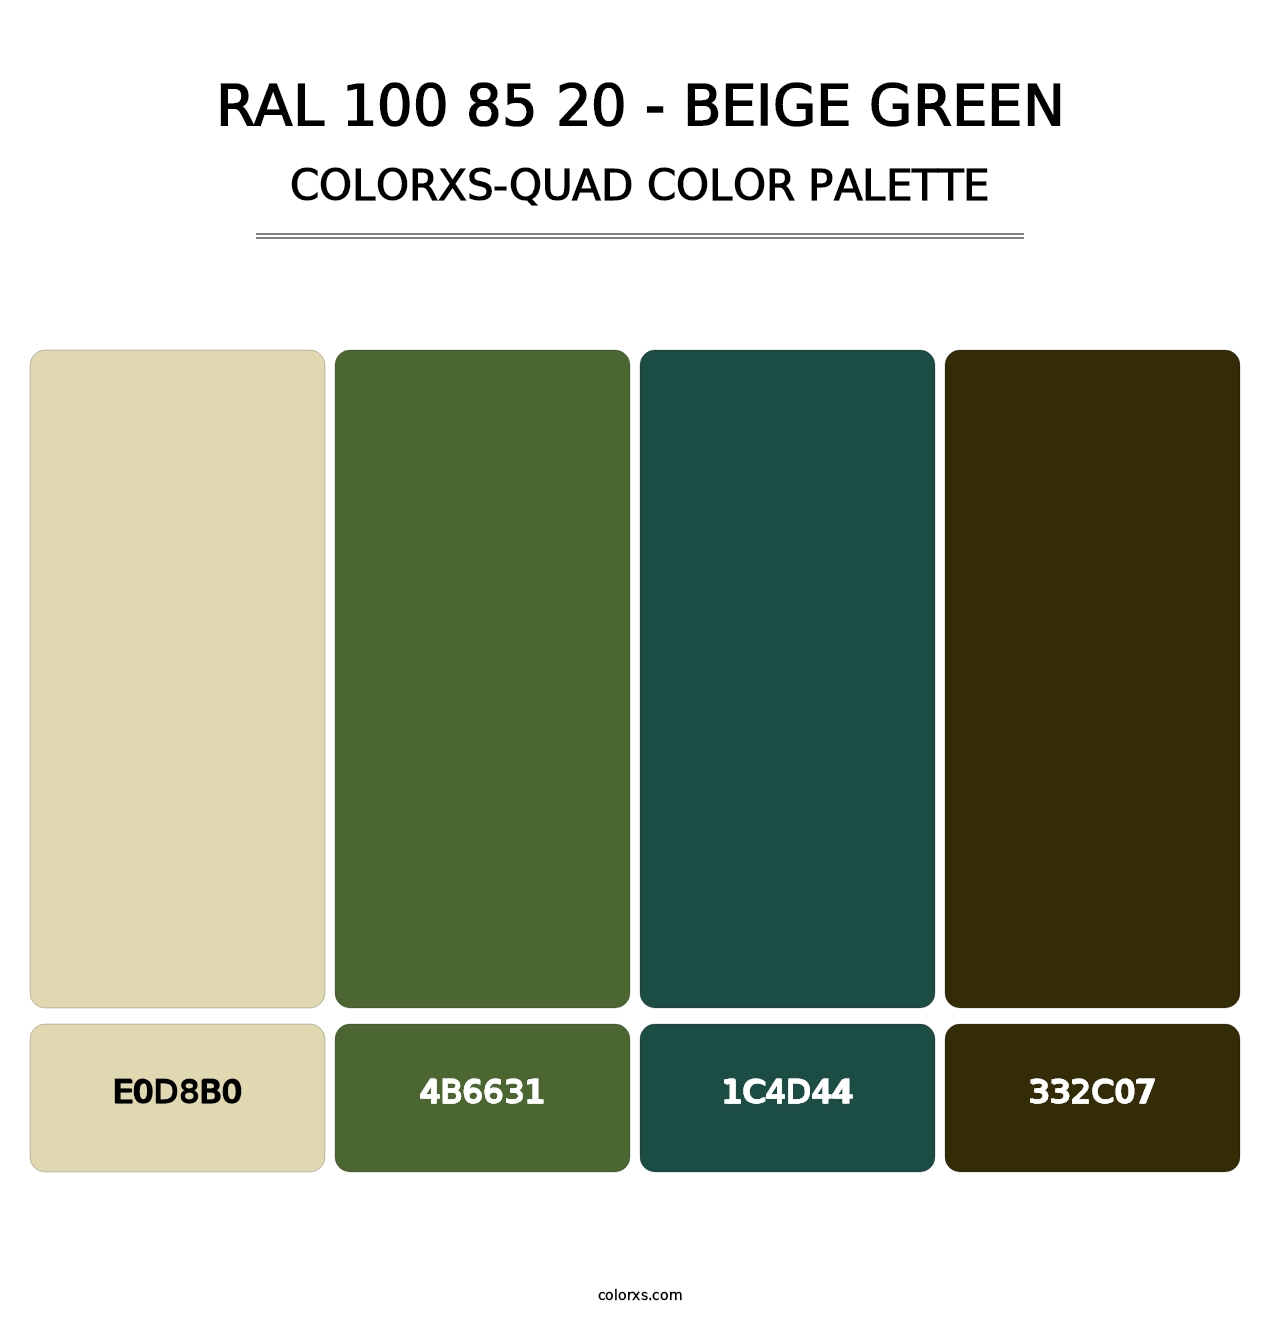 RAL 100 85 20 - Beige Green - Colorxs Quad Palette